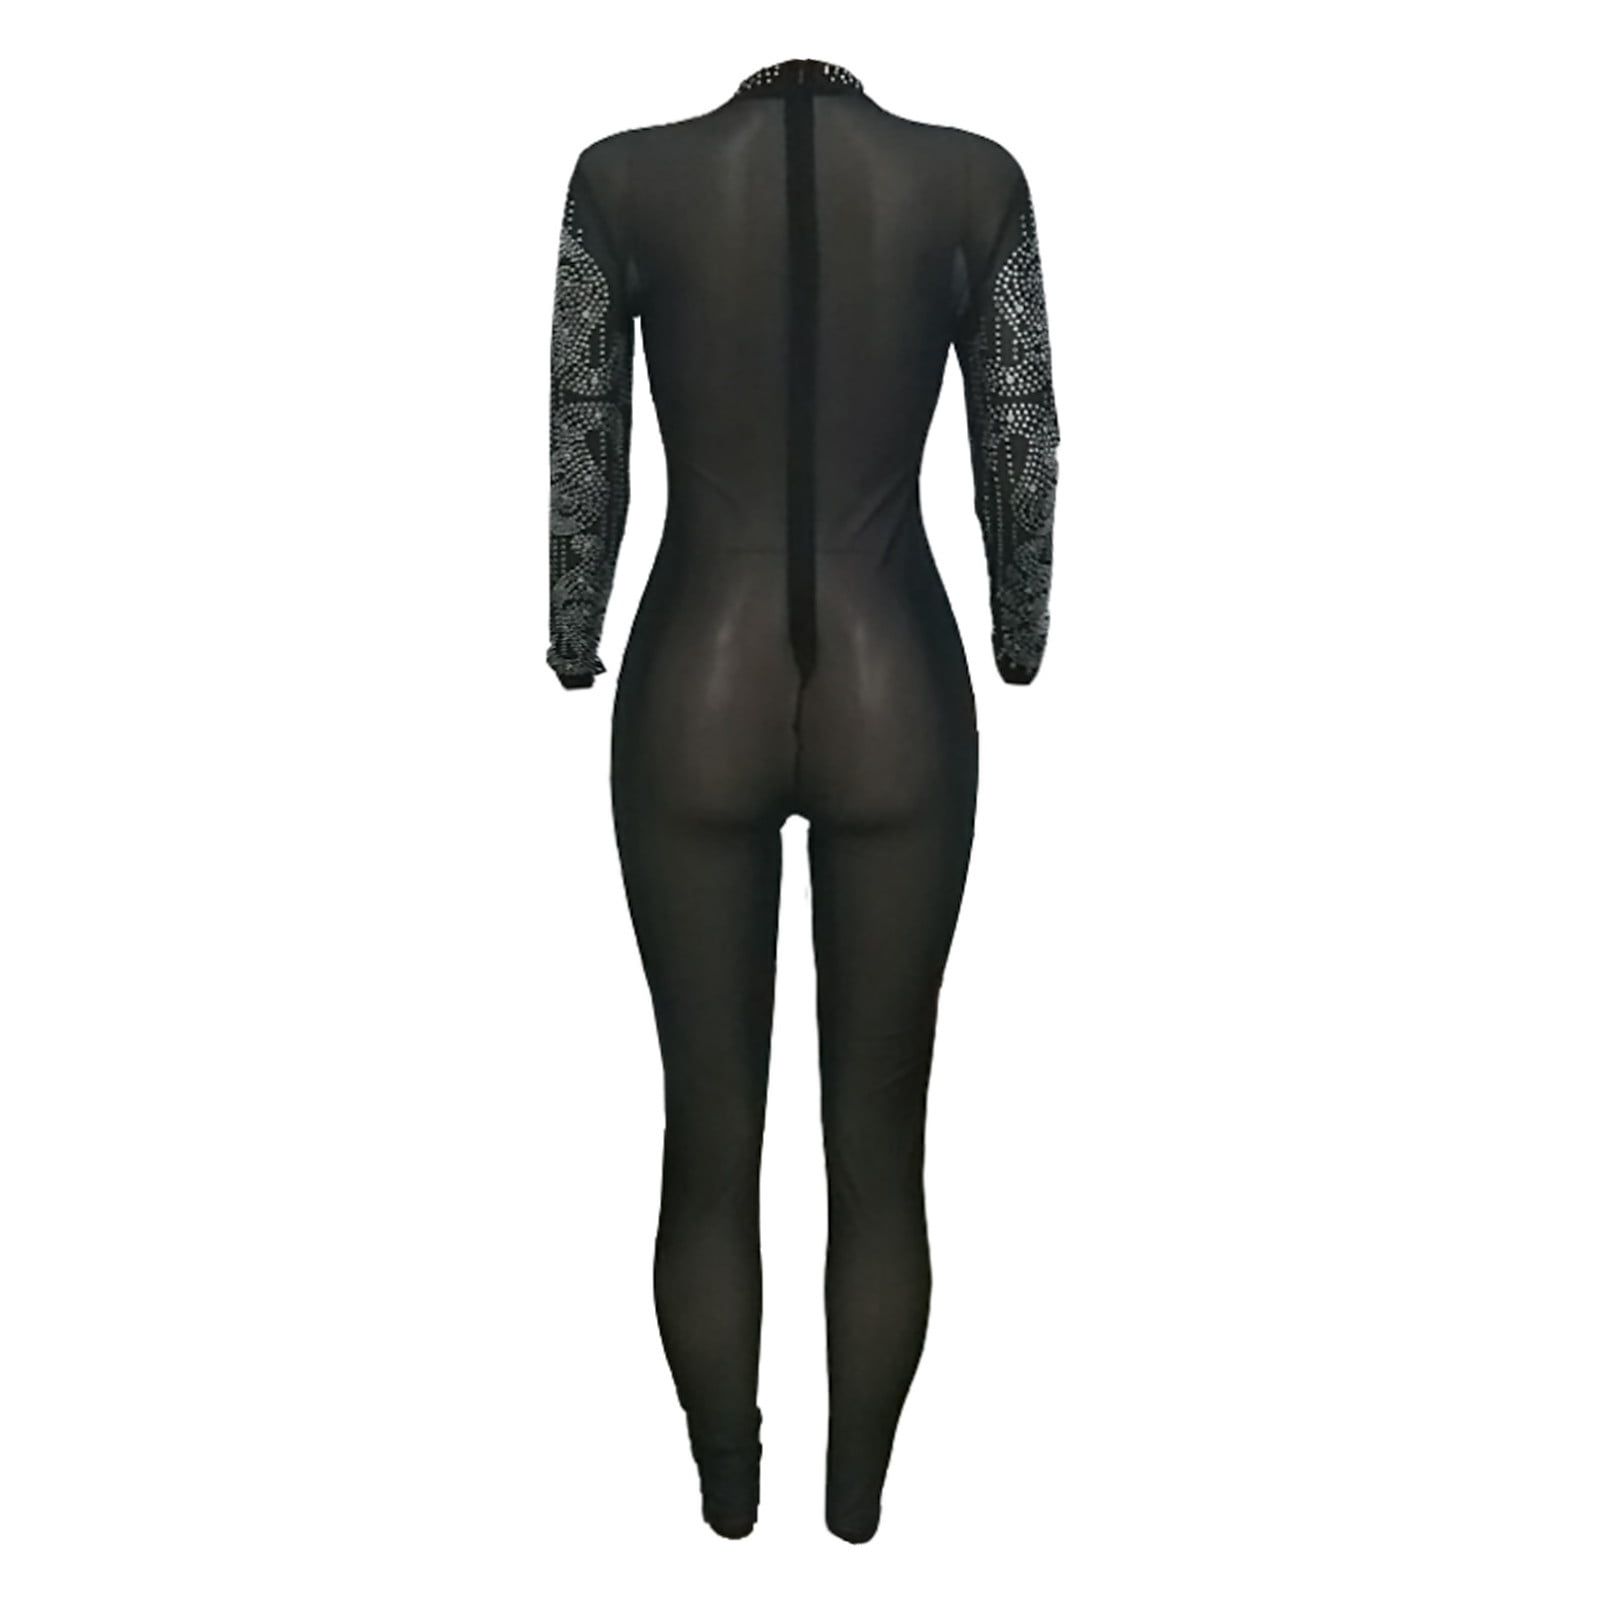 Aayomet Dressy Jumpsuits For Women Women's Zipper V Neck Long Sleeve  Jumpsuit Rompers Bodysuit Catsuit Sport Jumpsuit,Black S 